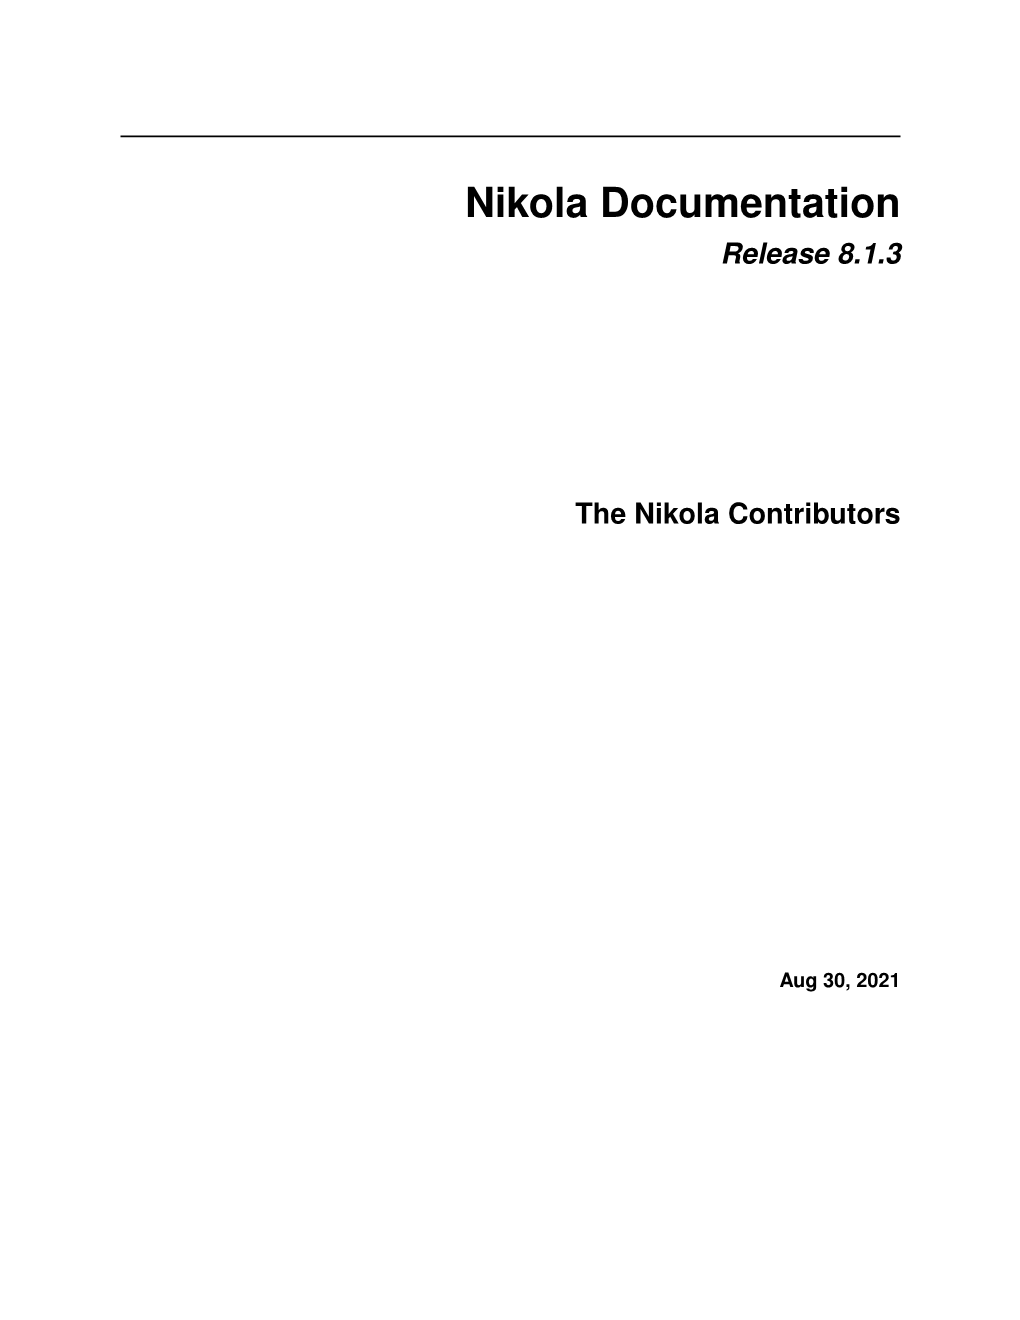 Nikola Documentation Release 8.1.3